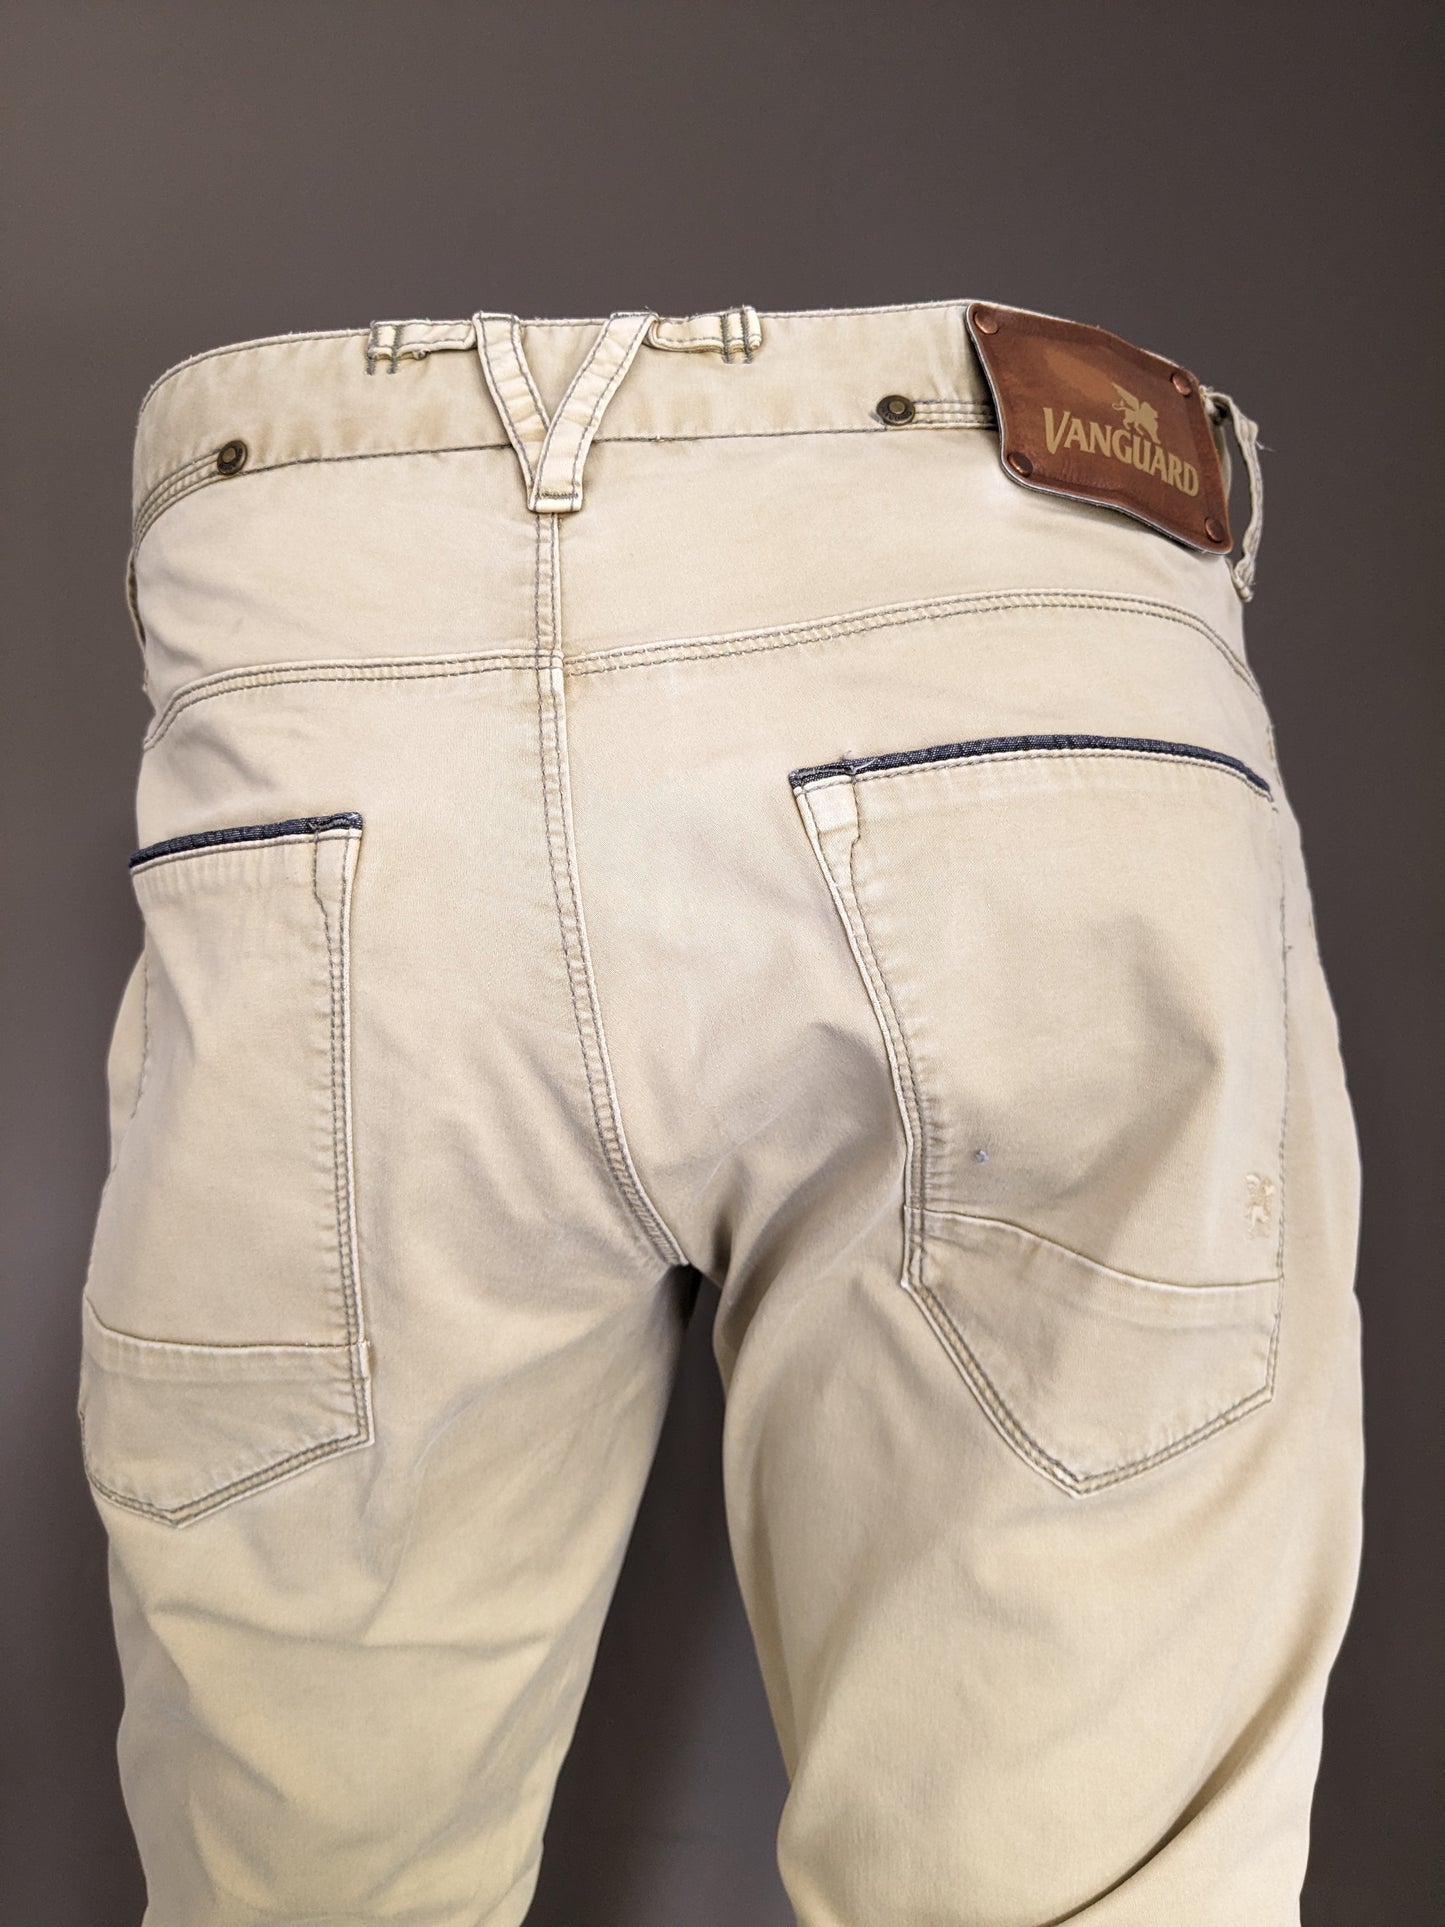 Pantaloni d'avanguardia. Beige colorato. Taglia W31 - L32.